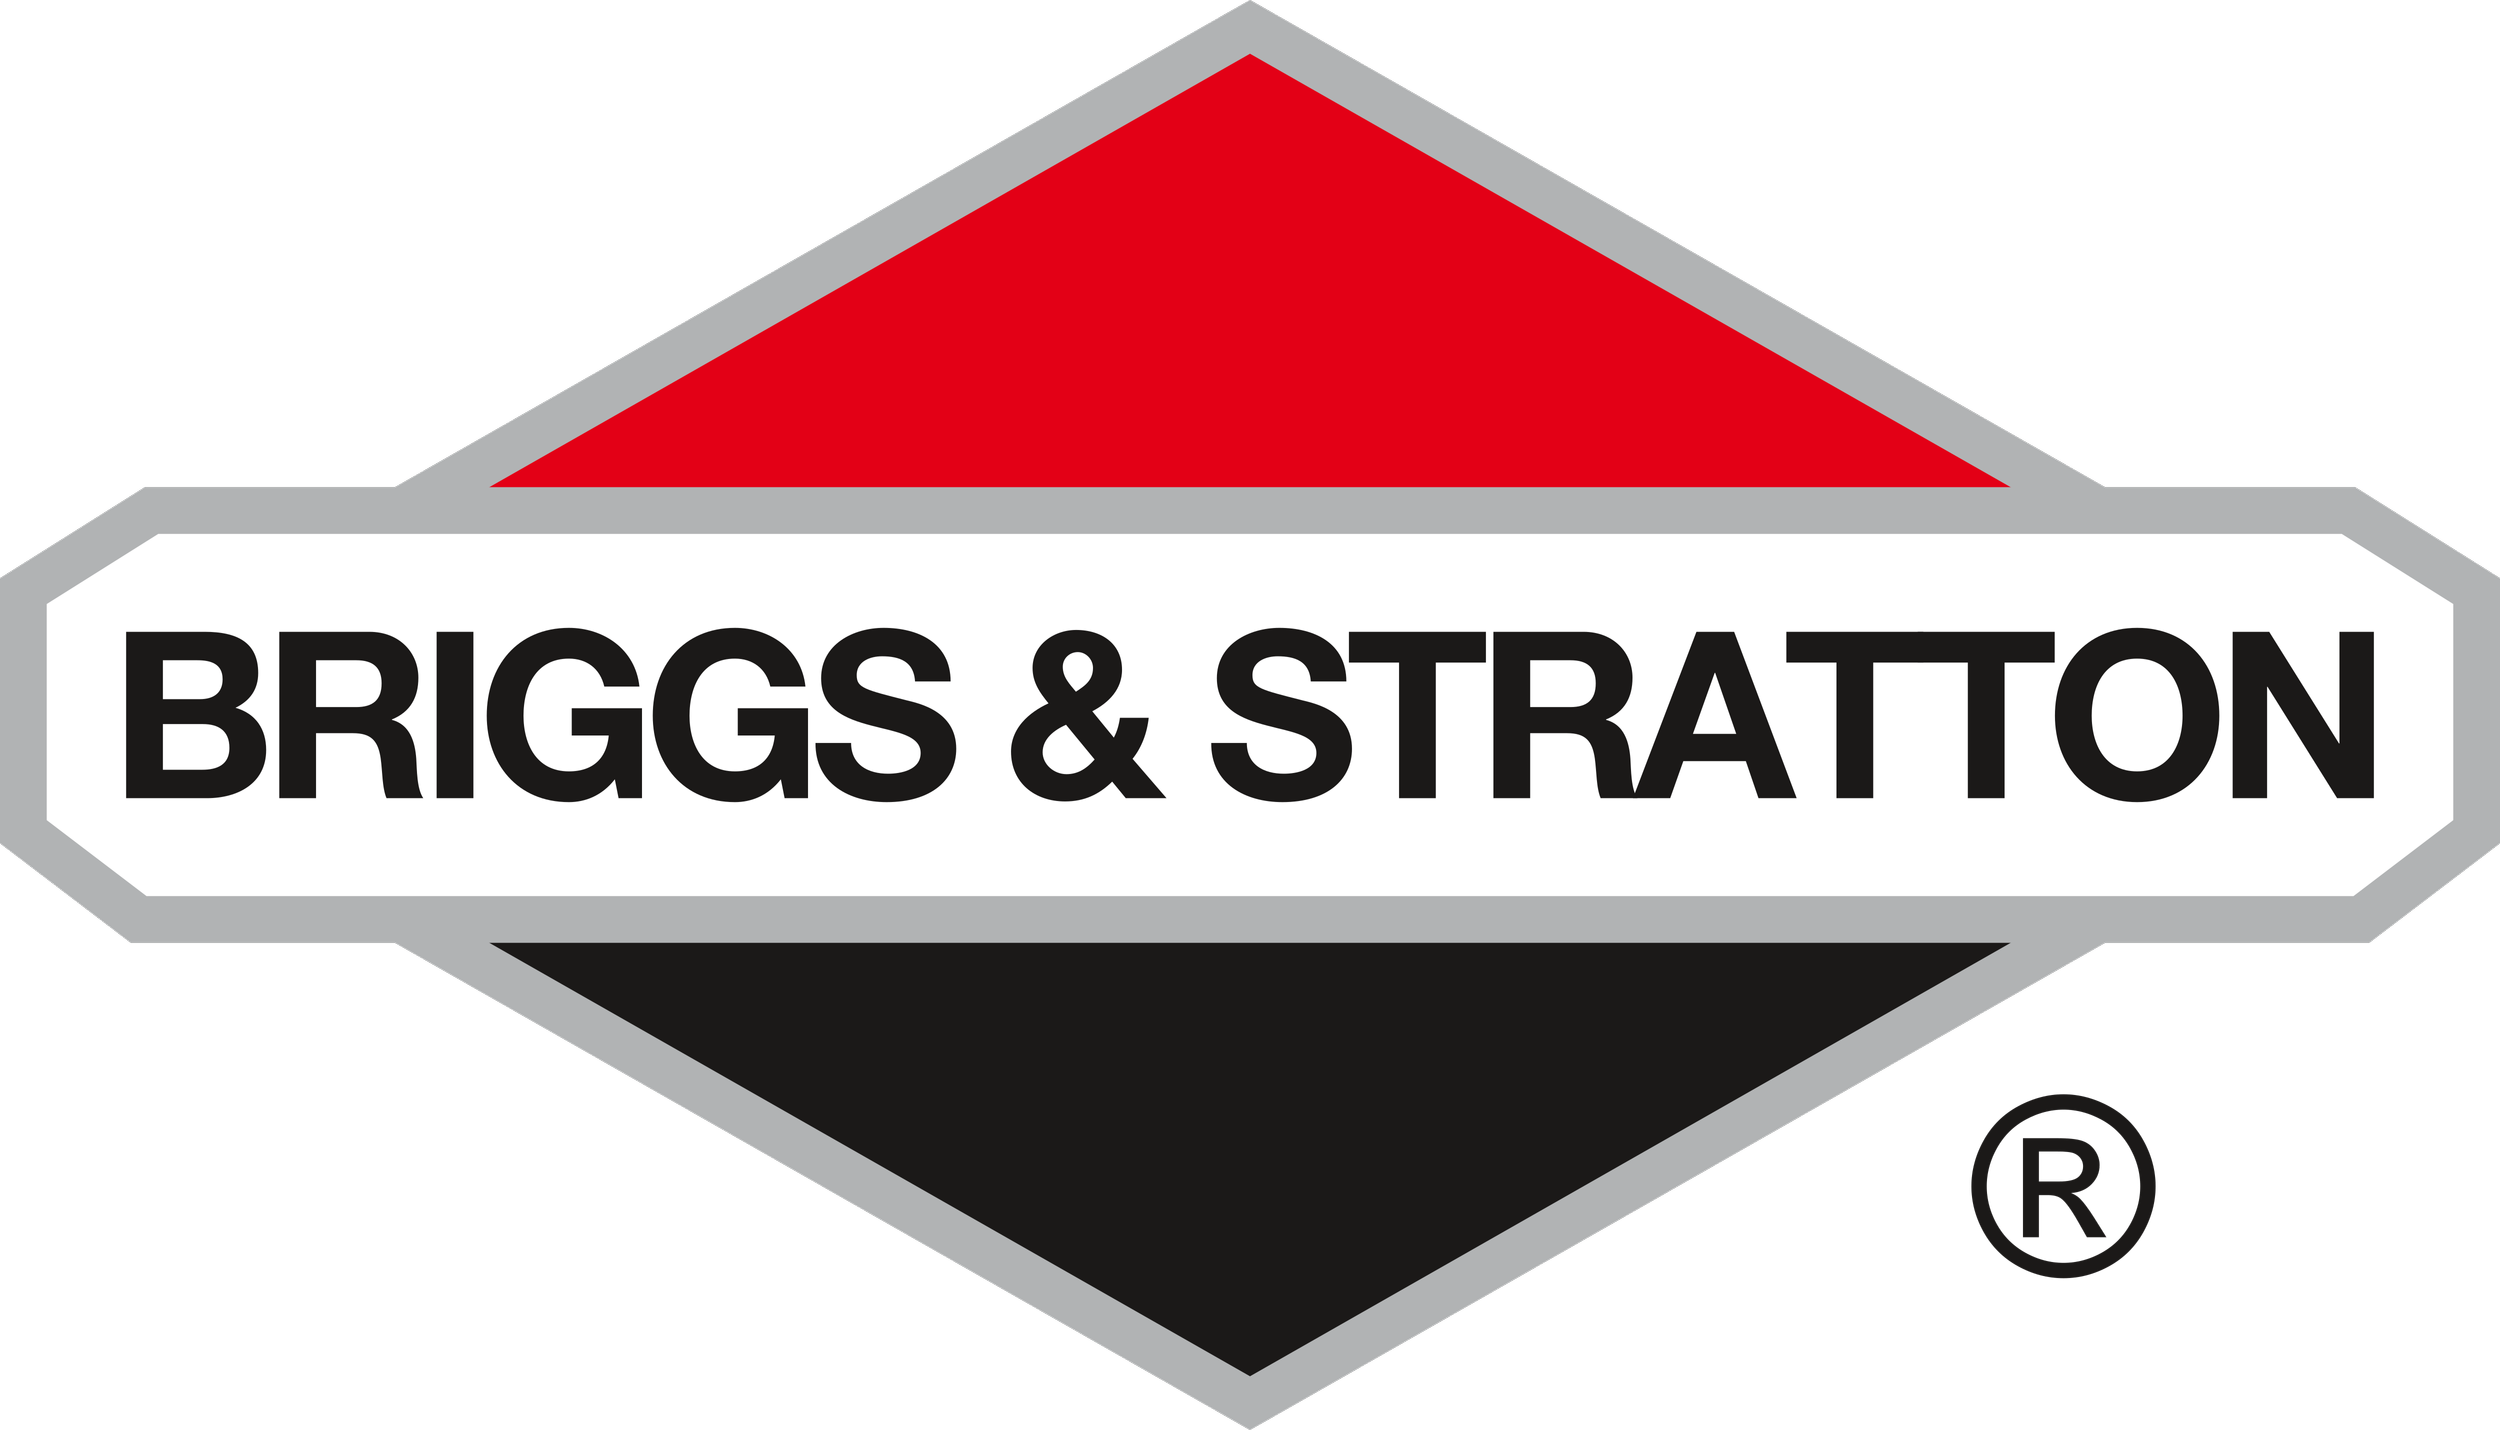 Briggs & Stratton logo 2020.png